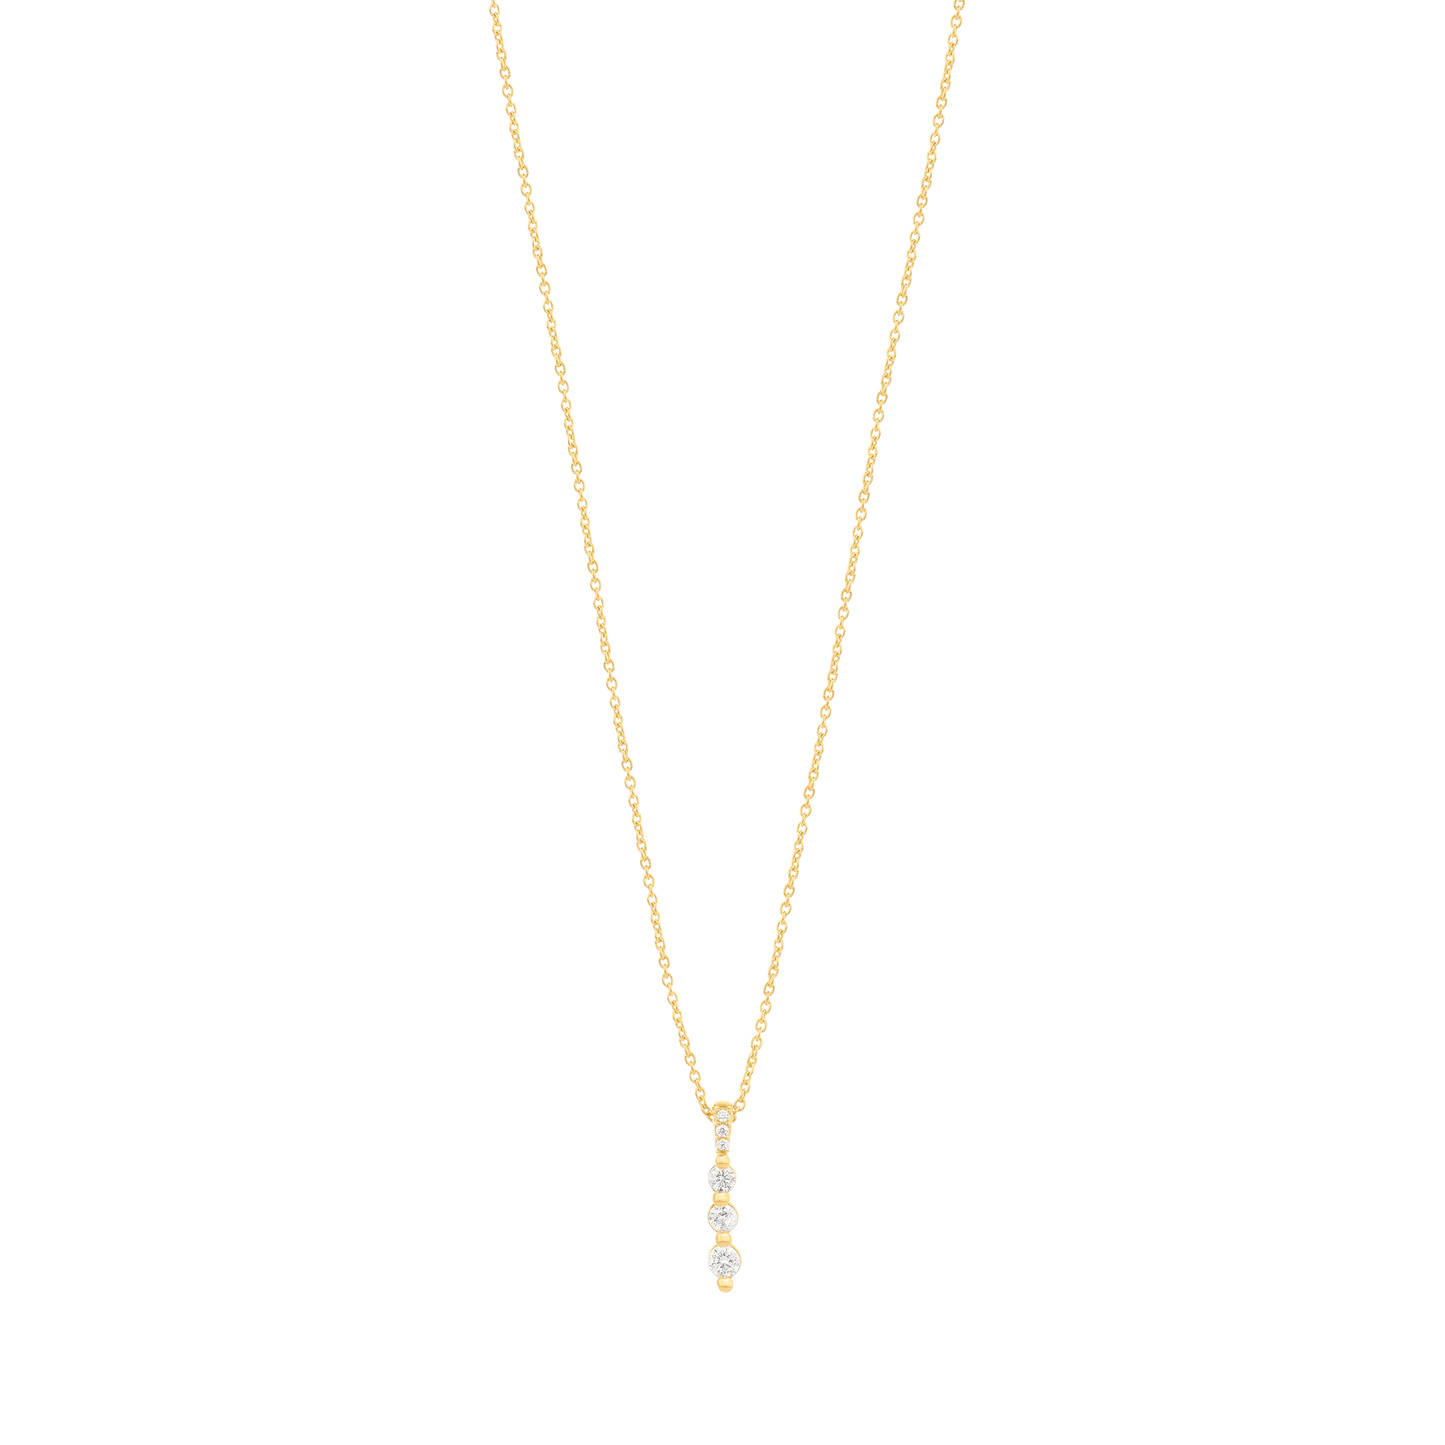 3 Diamonds Bar Necklace - 14K Rose Gold Necklaces magal-dev 